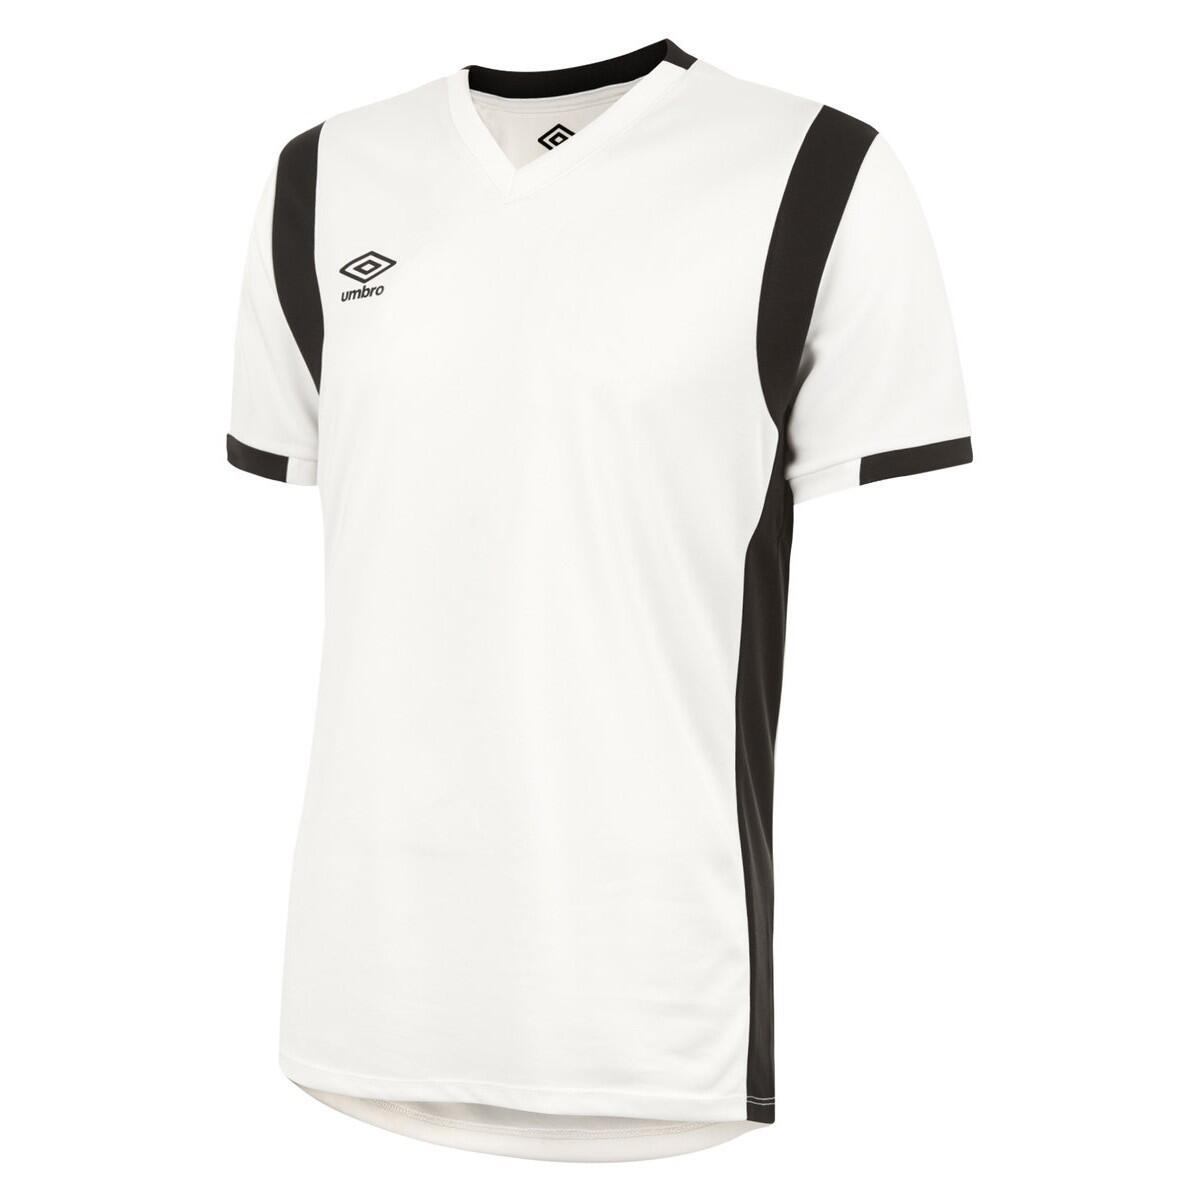 UMBRO Mens Spartan ShortSleeved Jersey (White/Black)